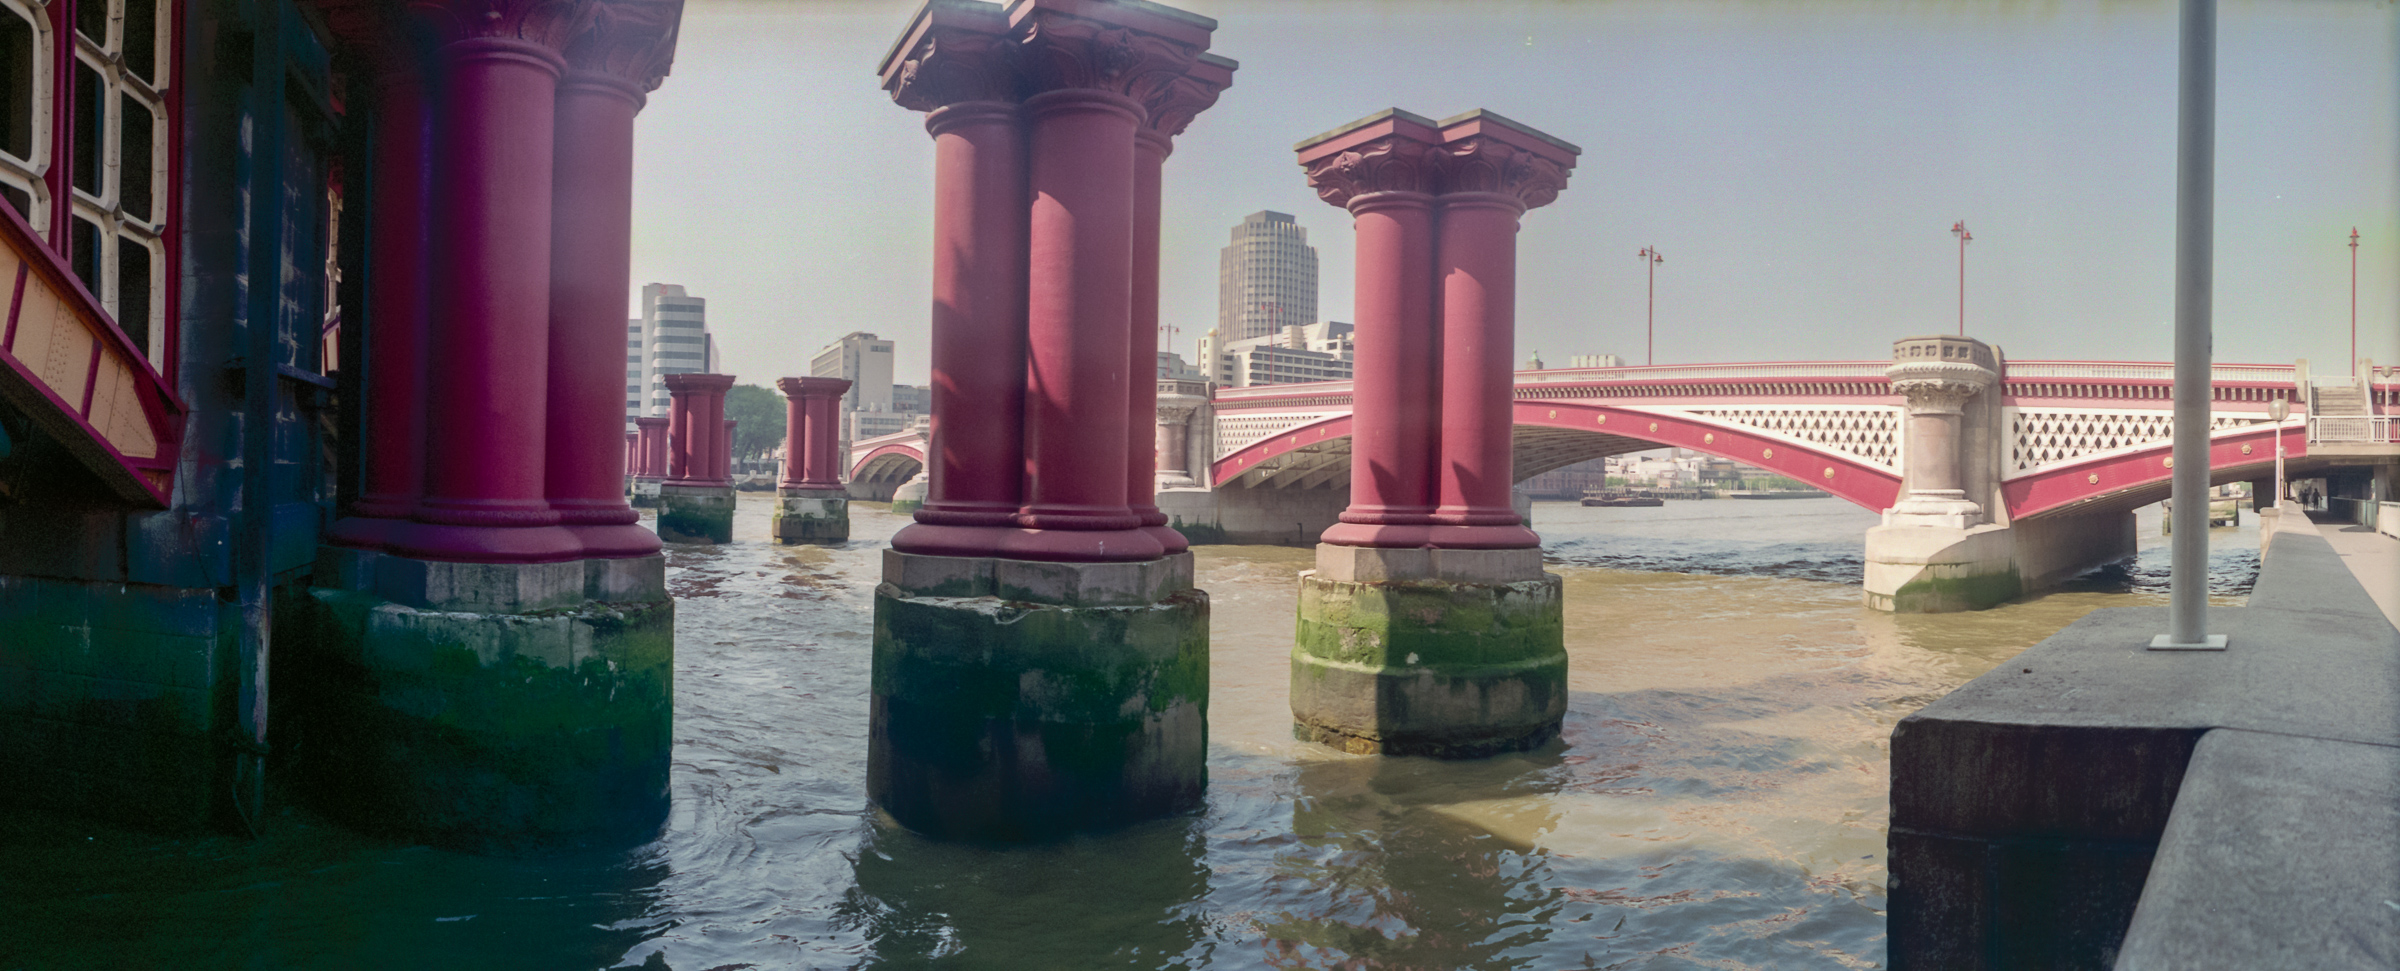 Panoramic Photos of London